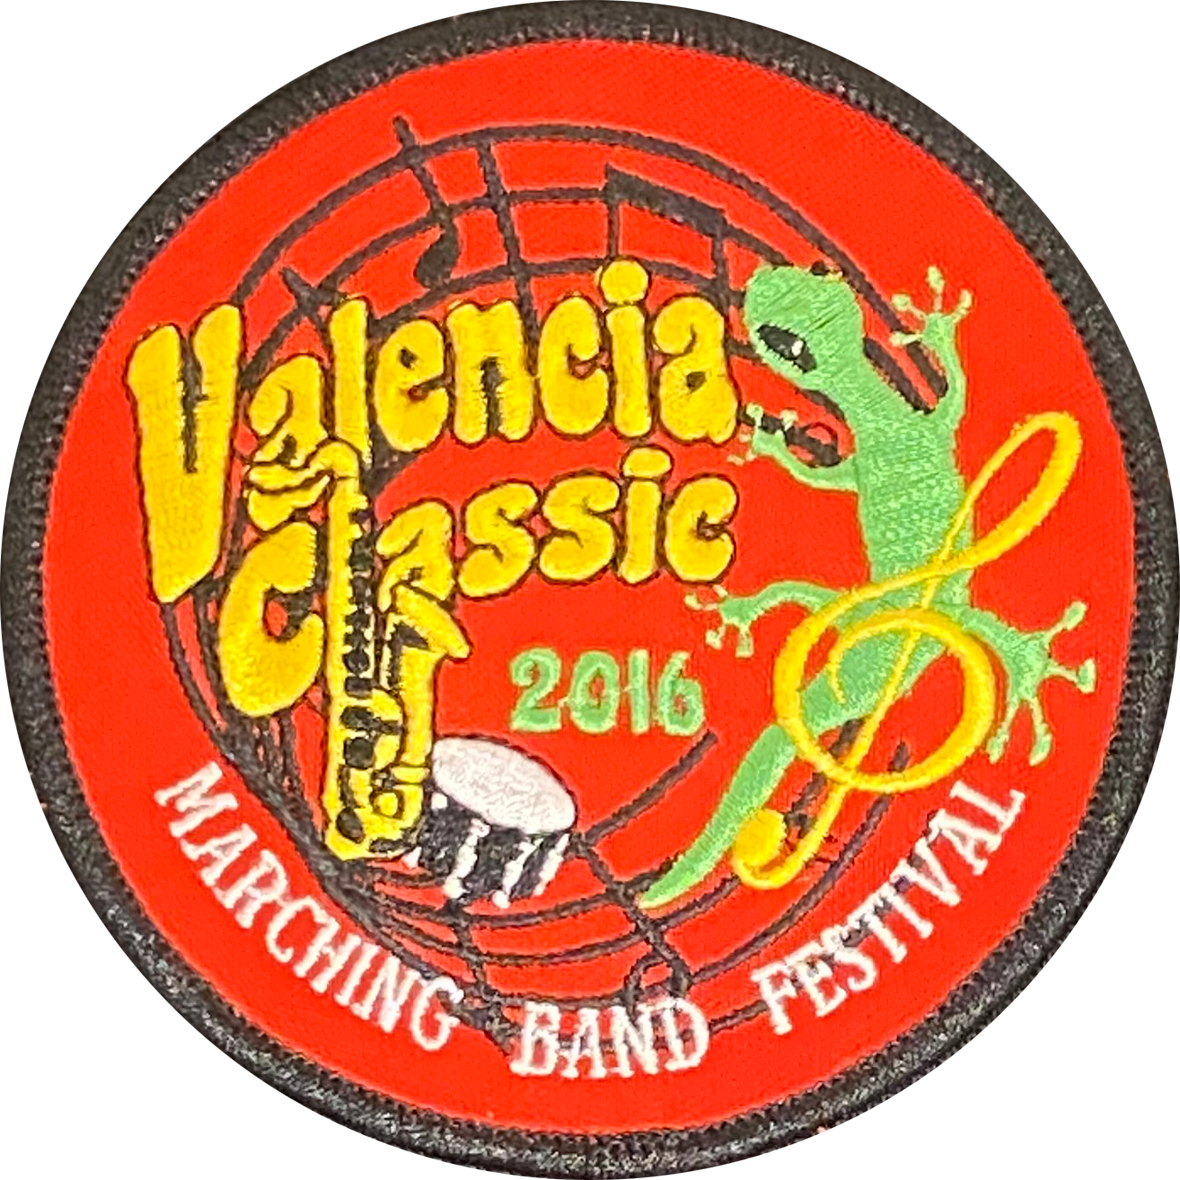 Valencia Classic 2016 Patch